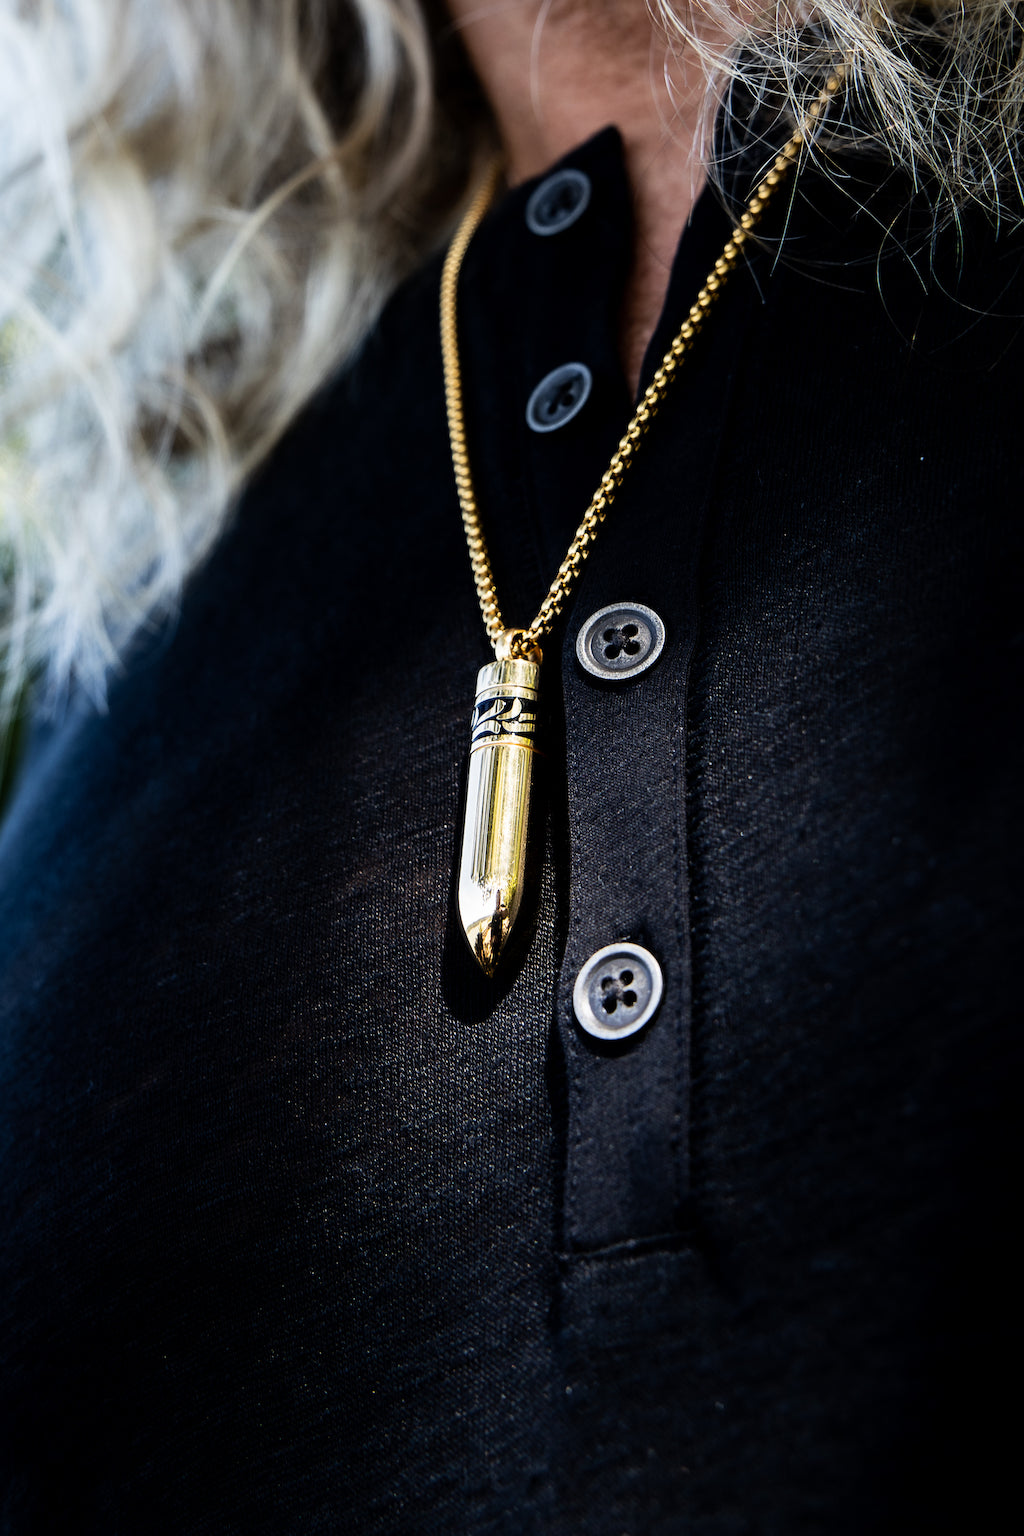 Rn Gold Plated Superb Finish Bullet Design Pendant Locket Necklace For Men Gold-plated Alloy Pendant